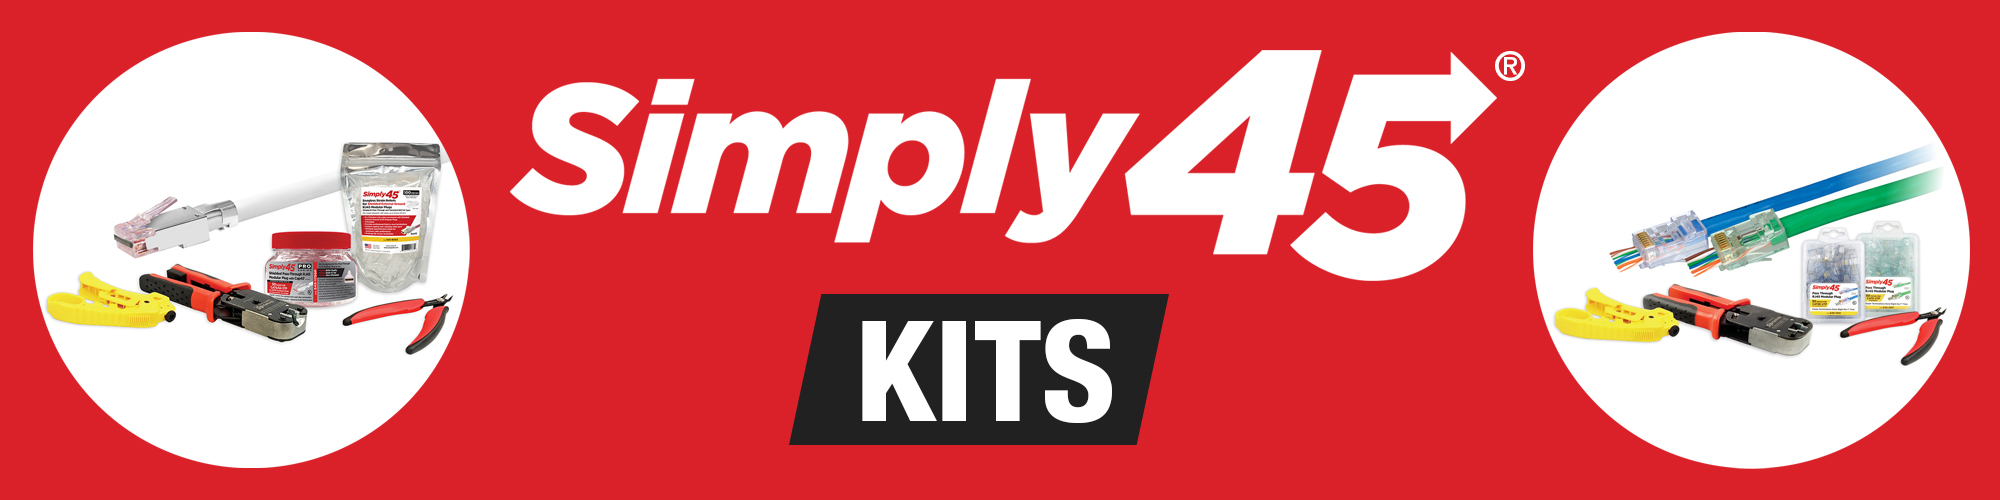 Simply45 Kits